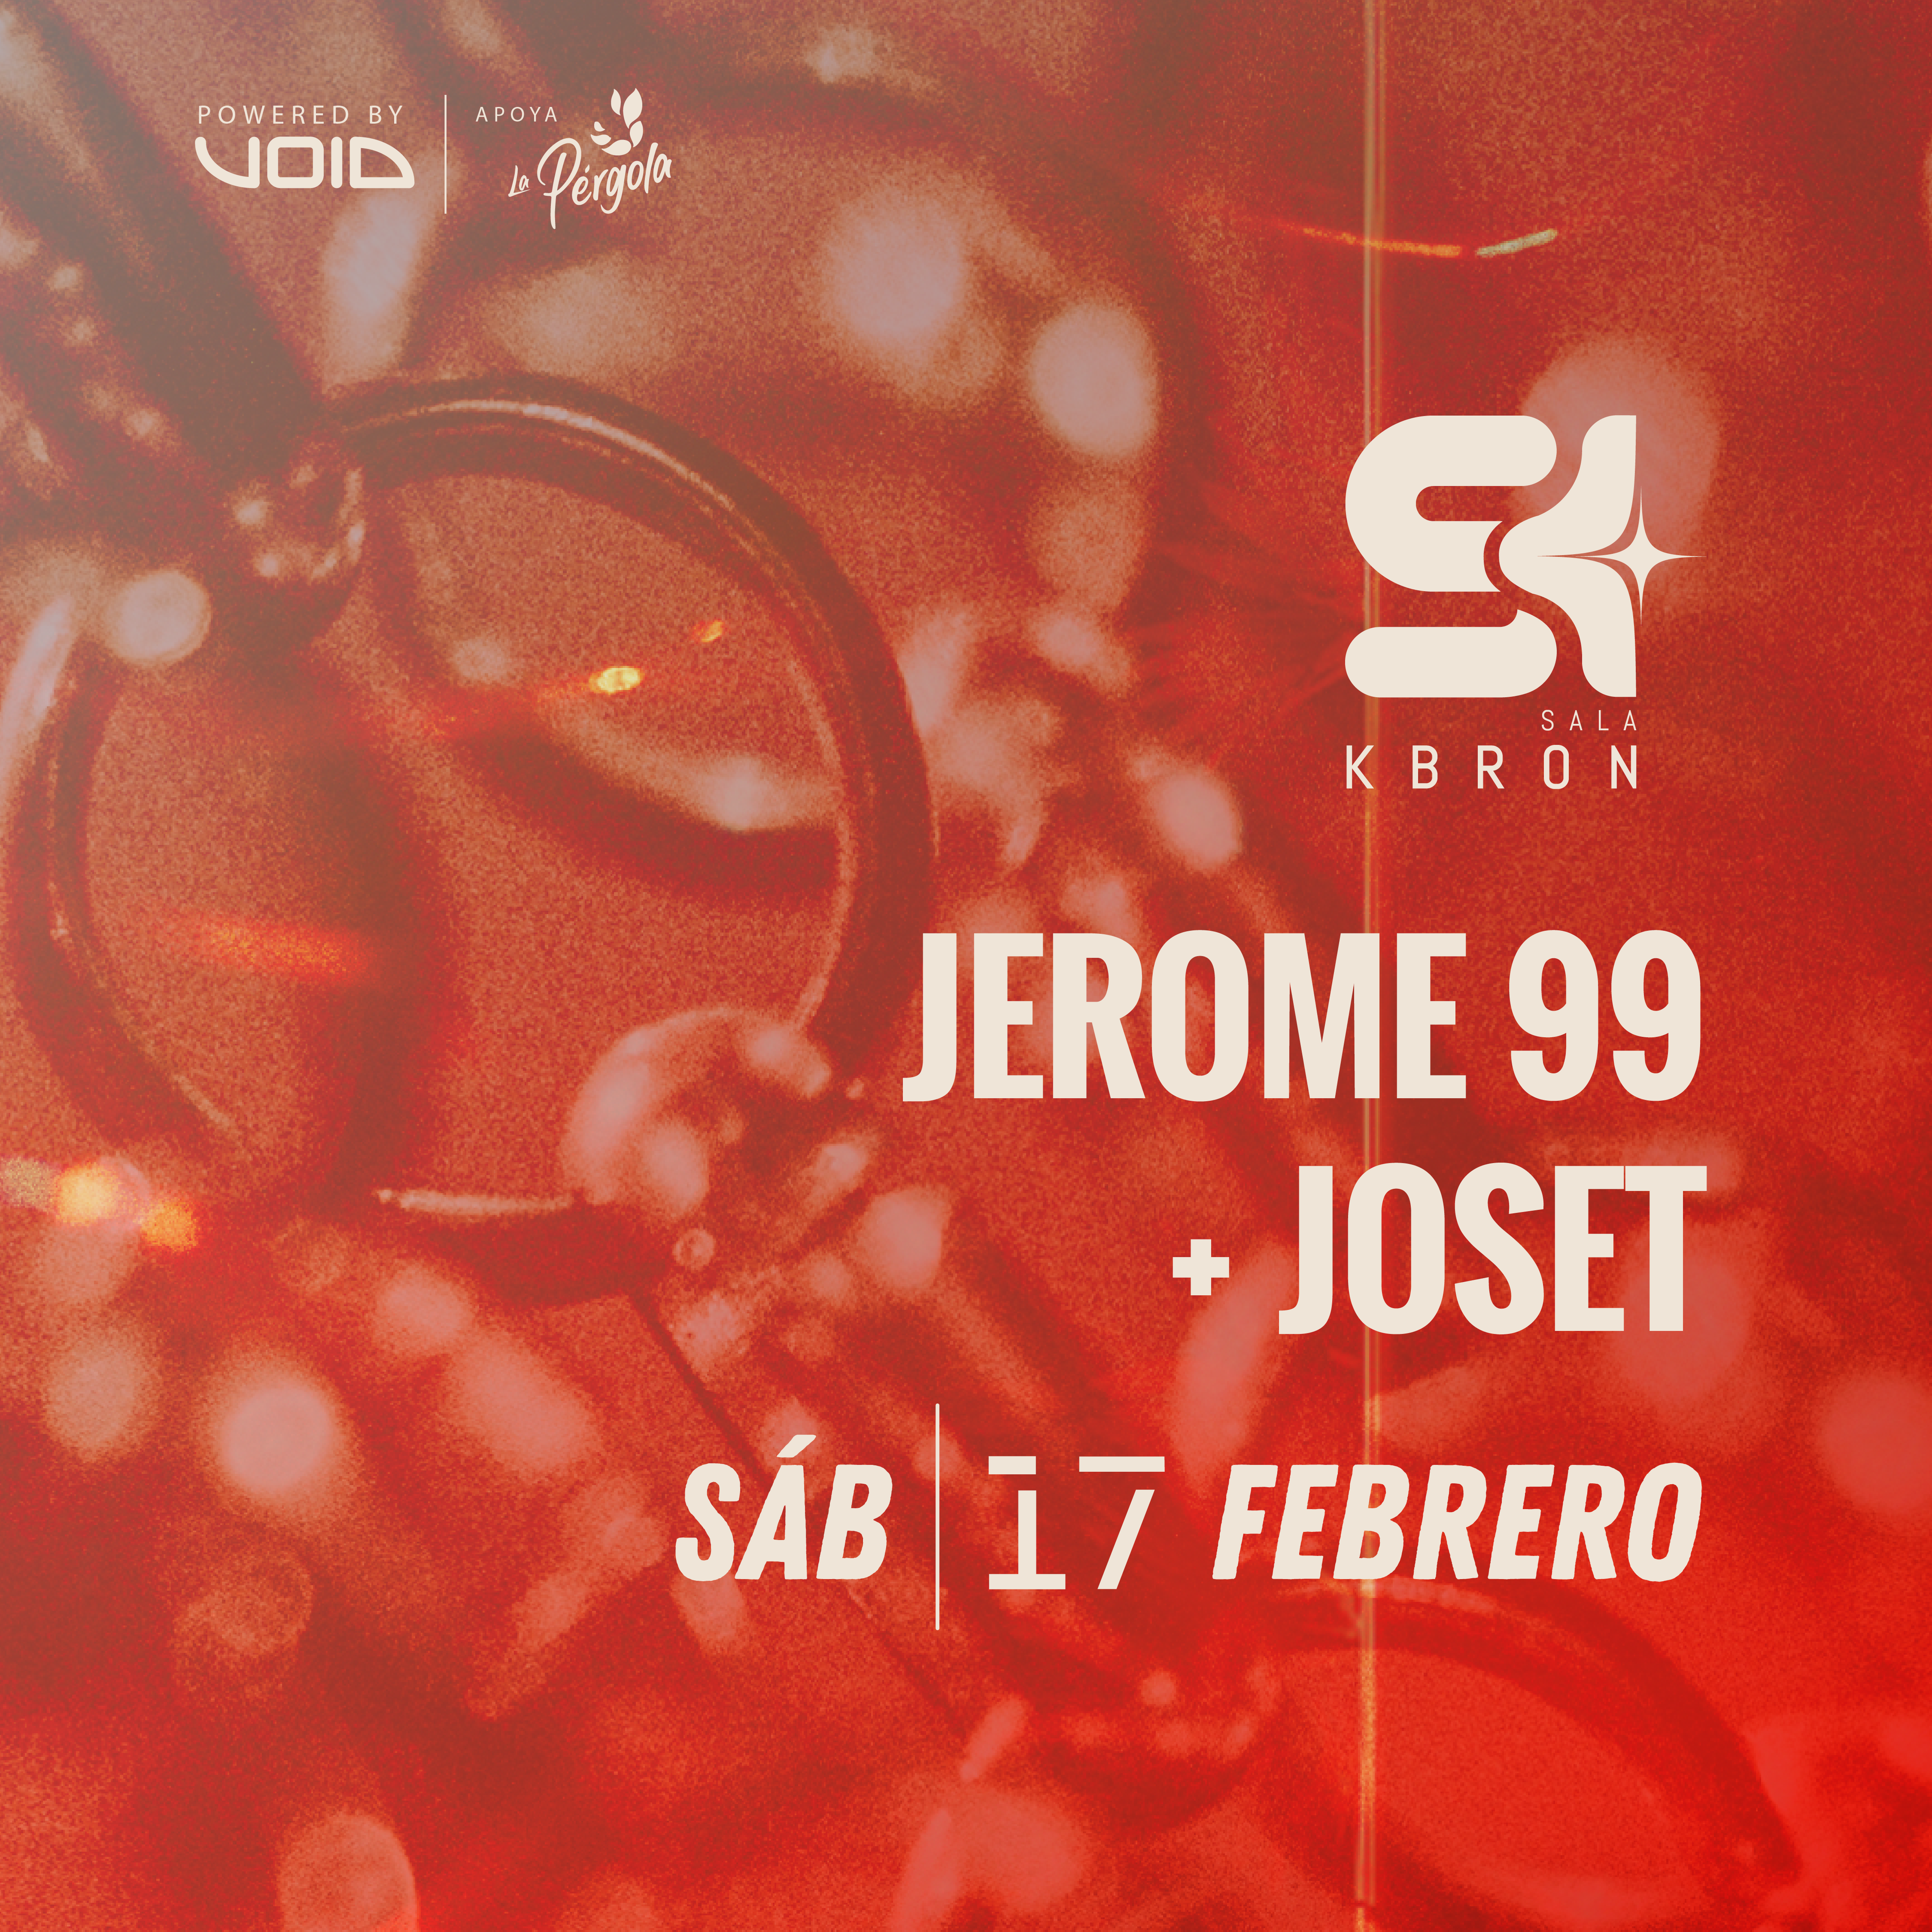 Jerome 99 + JOSET - フライヤー表